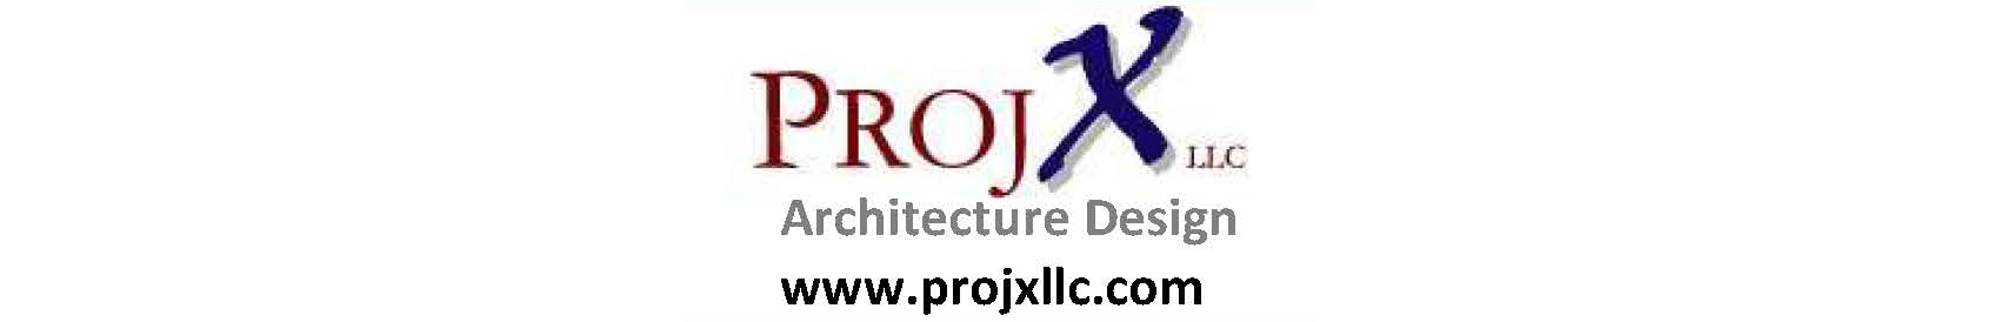 ProjX Logo LONG.jpg